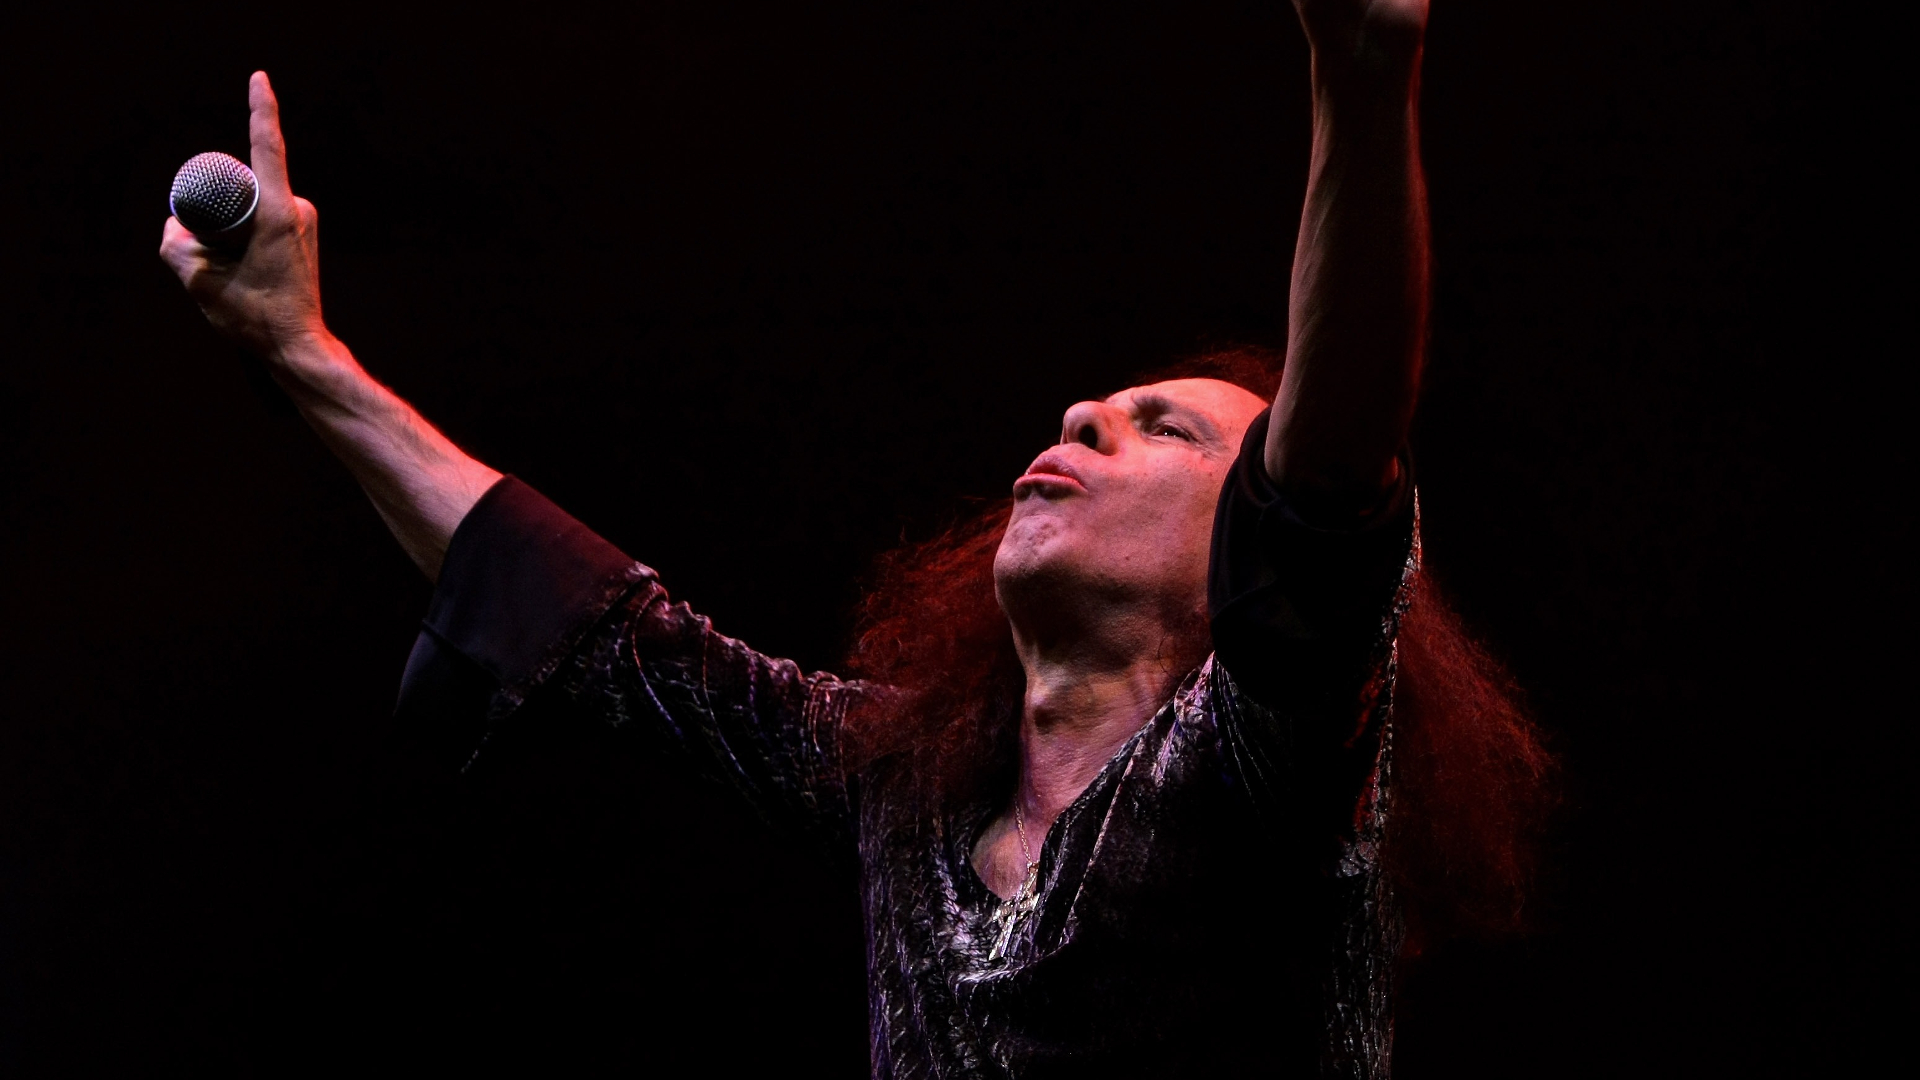 Stargazer av Ronnie James Dio